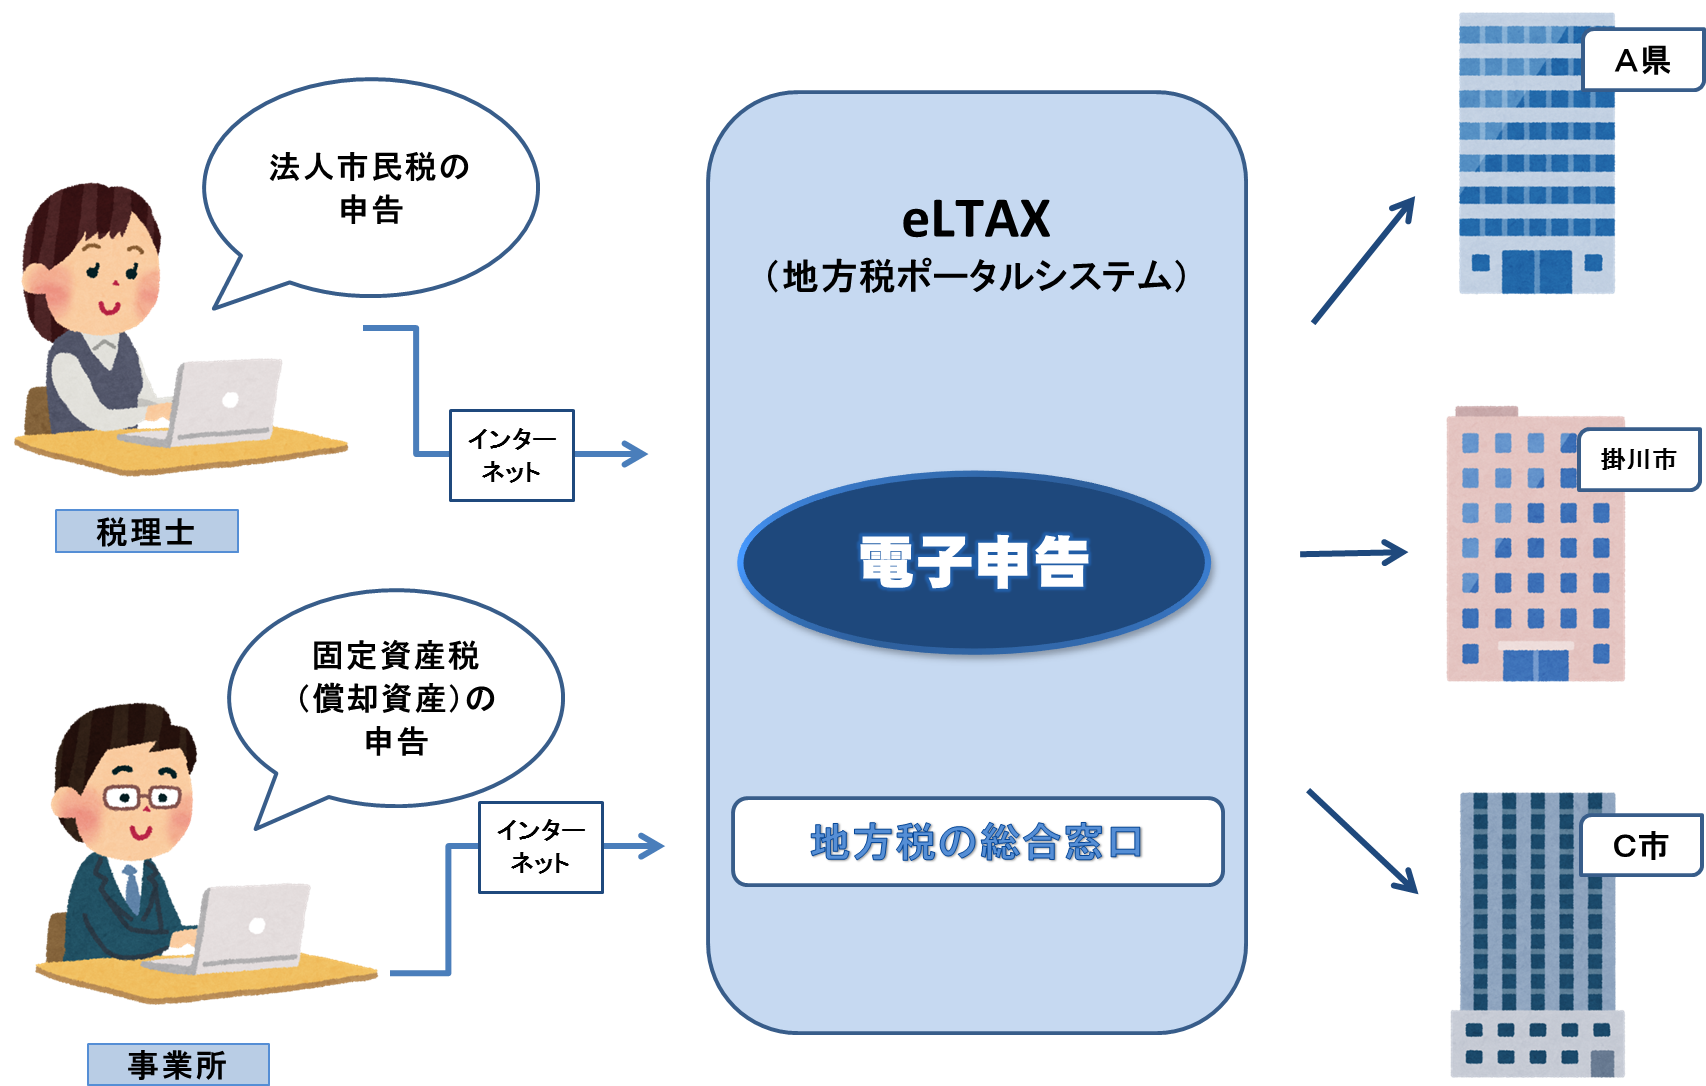 eLTAX電子申告フロー図のイラスト